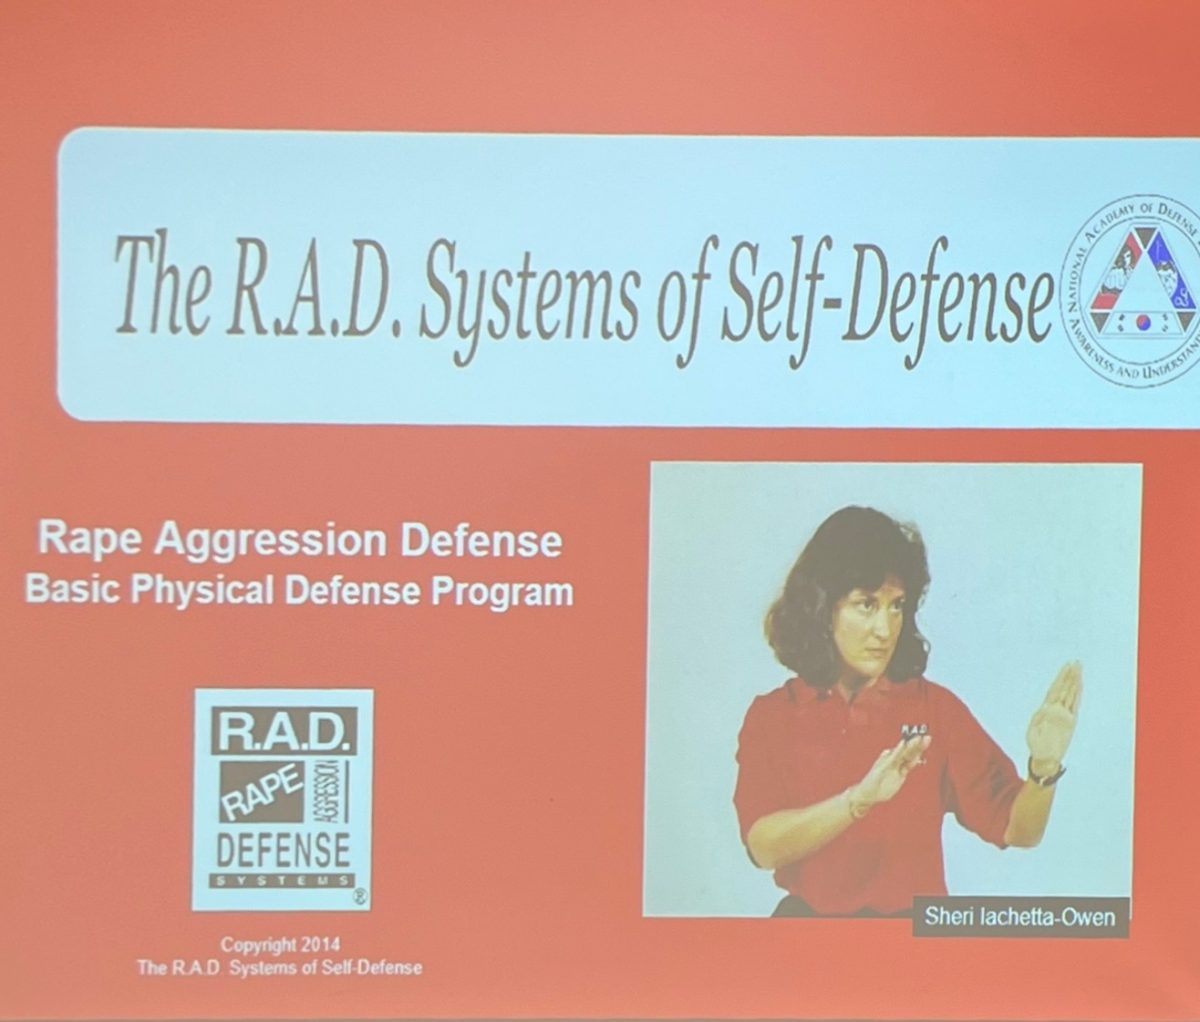 Keeping Students Safe: University Police Presents Rape Aggression Defense (RAD) Course